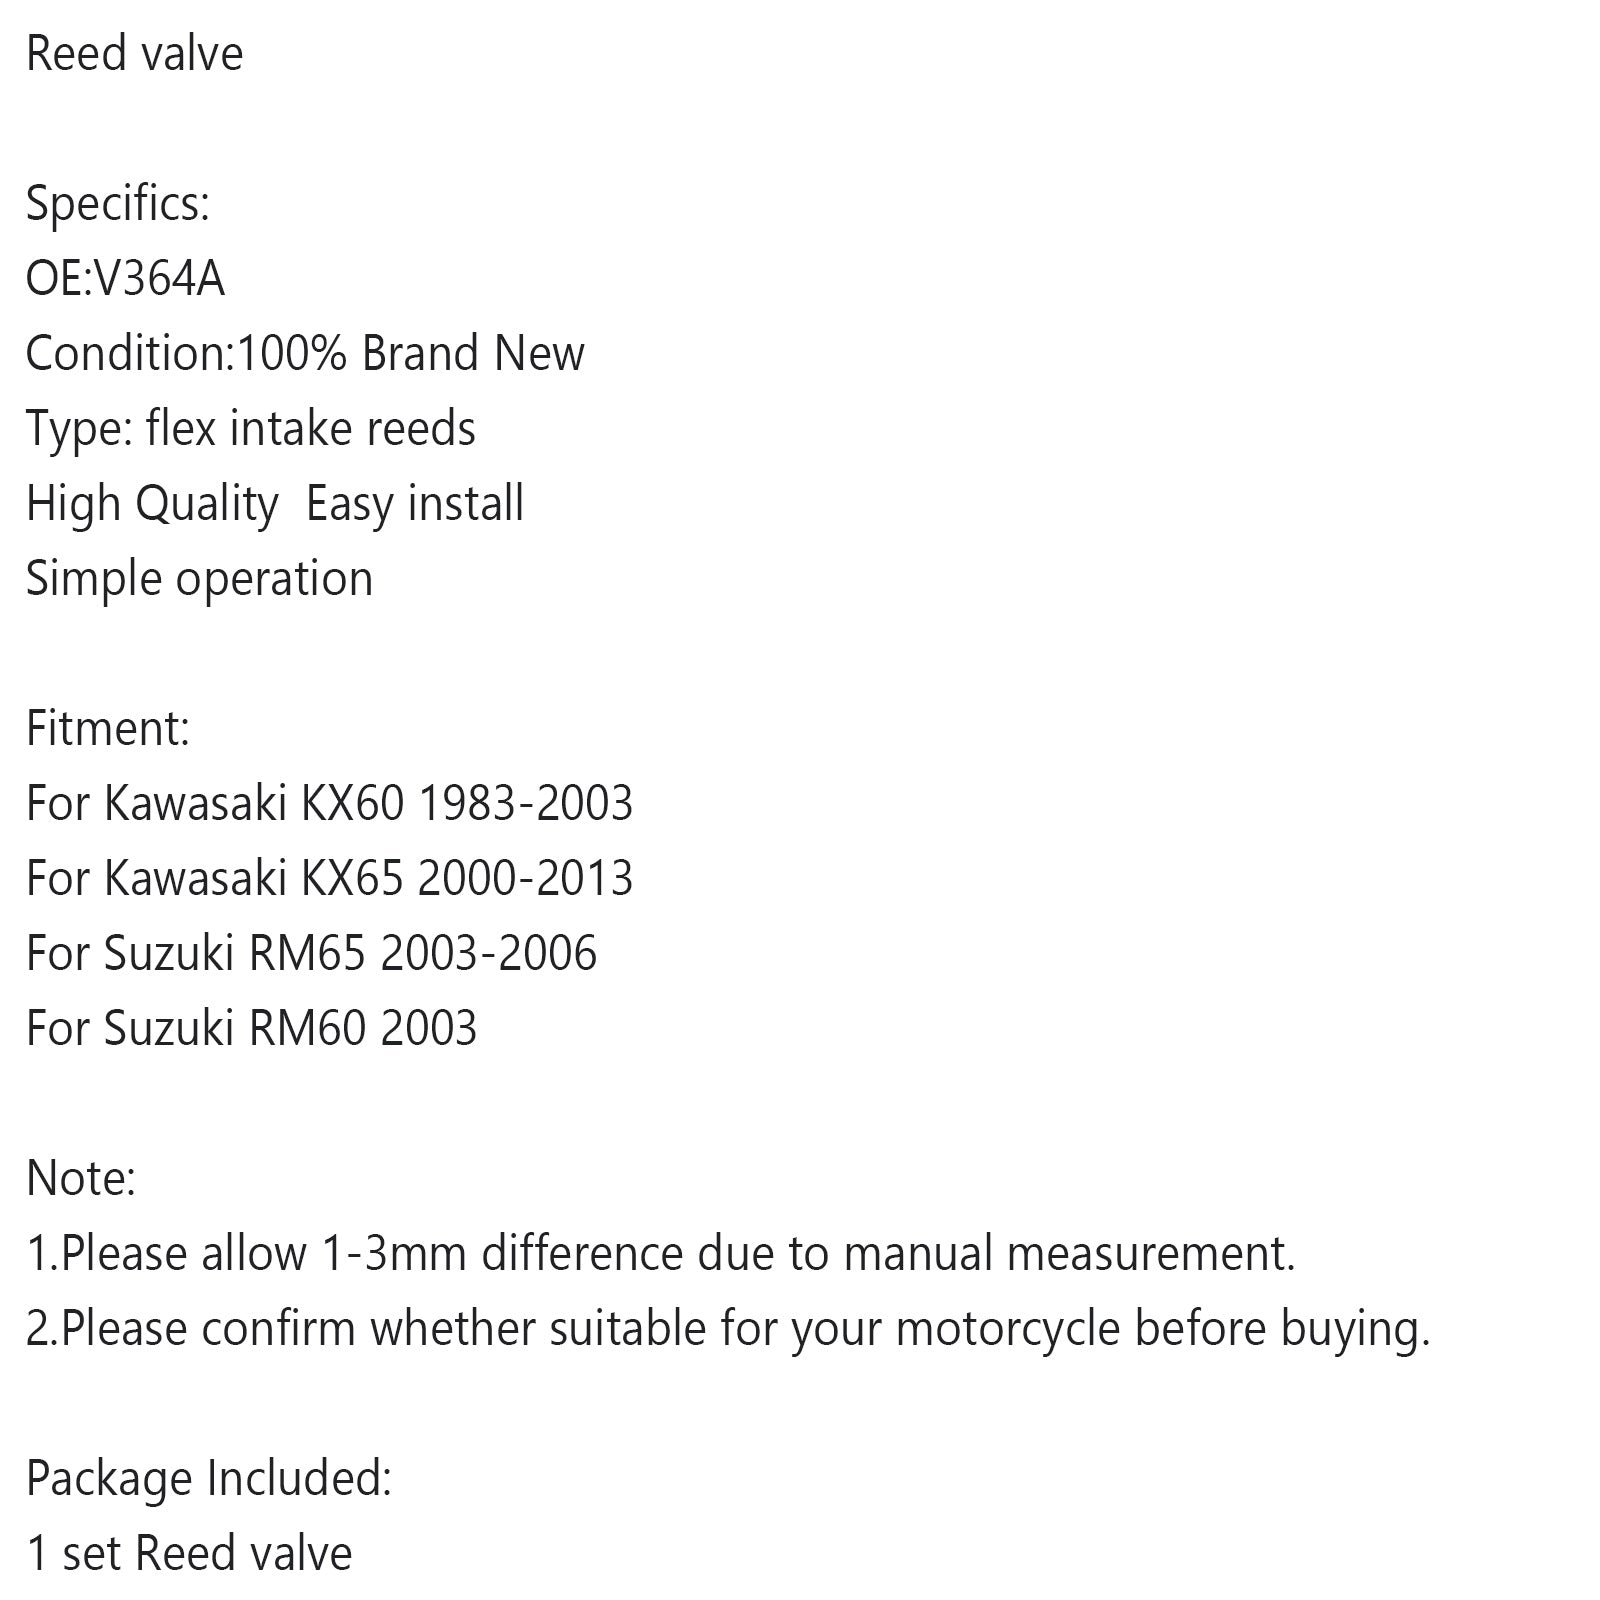 V364A Reed Valve System Fits For Kawasaki Dirtbike P/N KX60 KX65 RM65 RM60 Generic